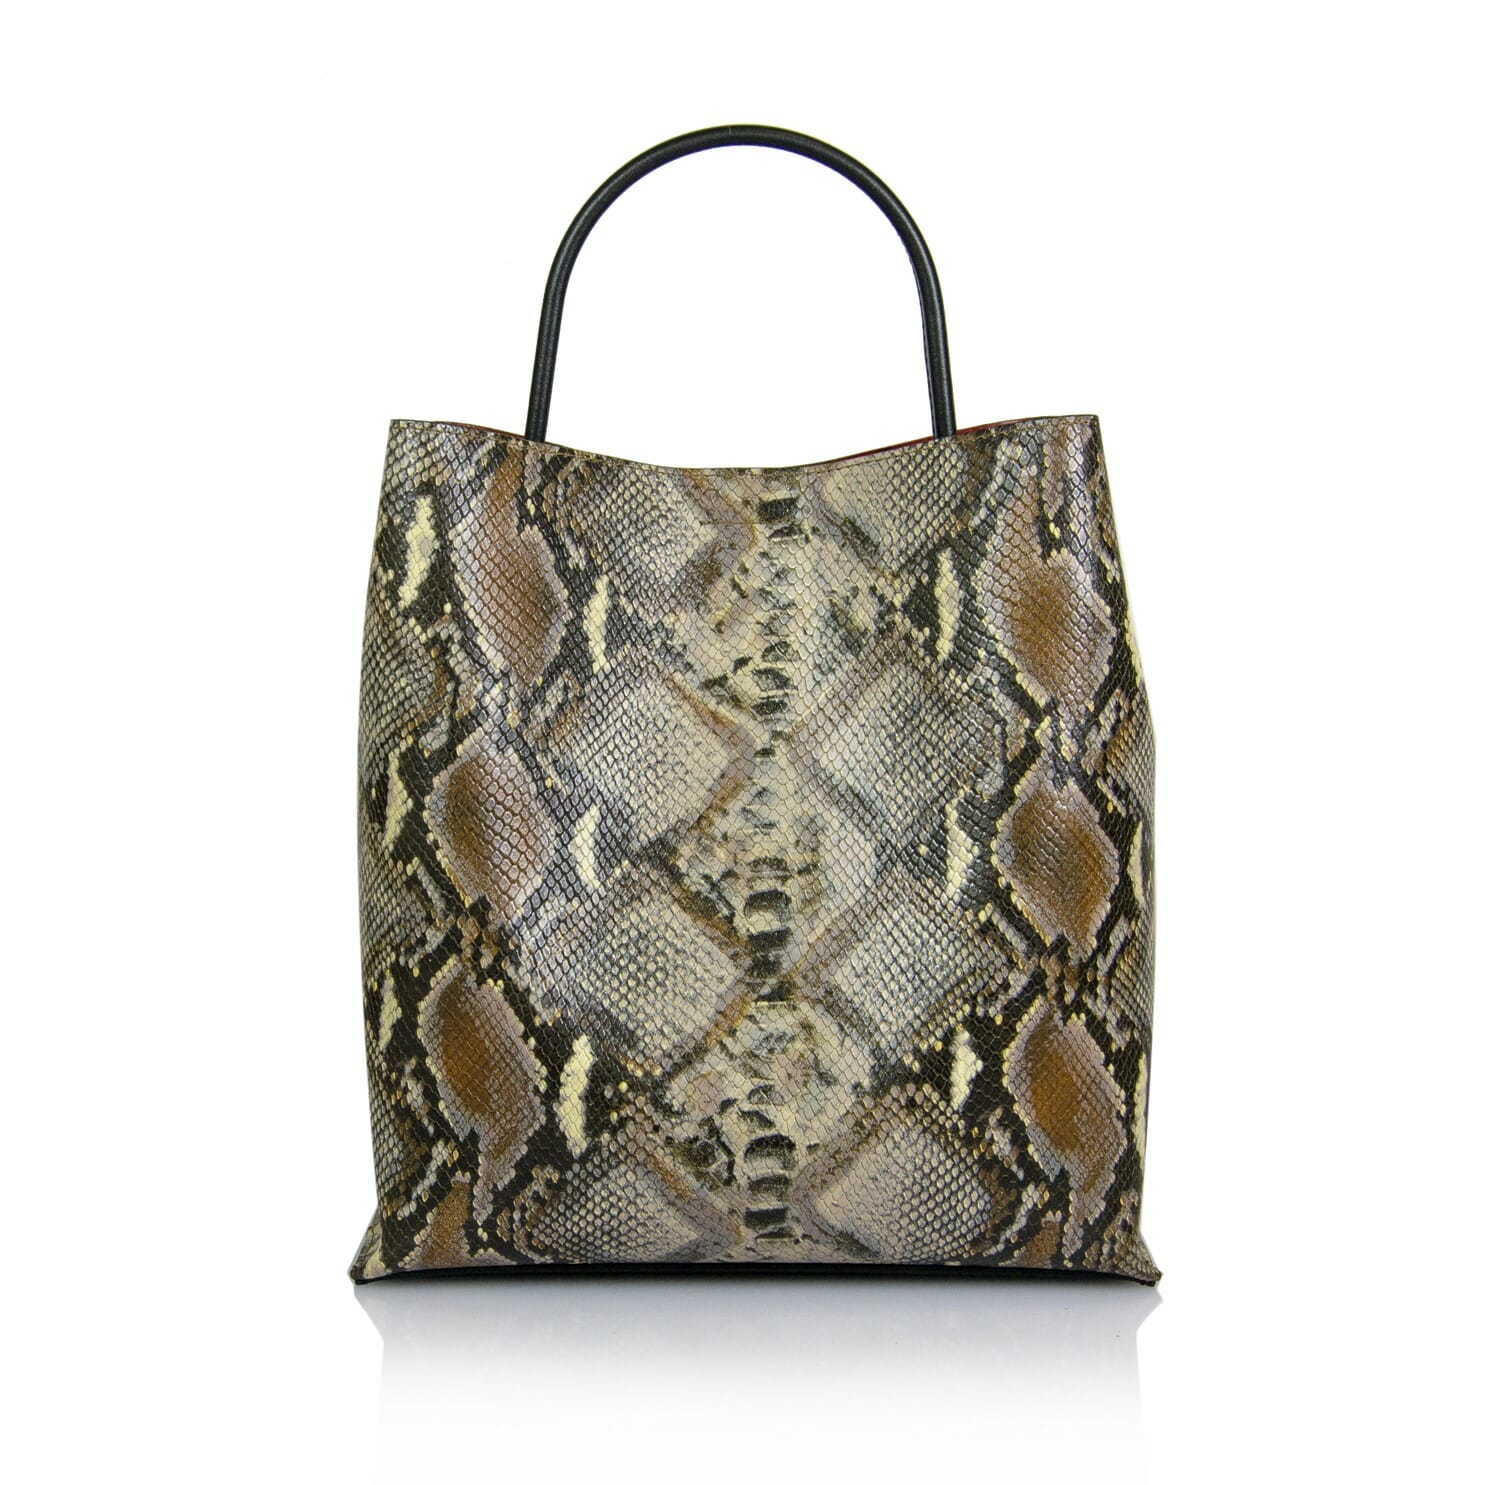 Simonetta Genuine Leather Shopper Bag in Crocodile Print. - TAUPE